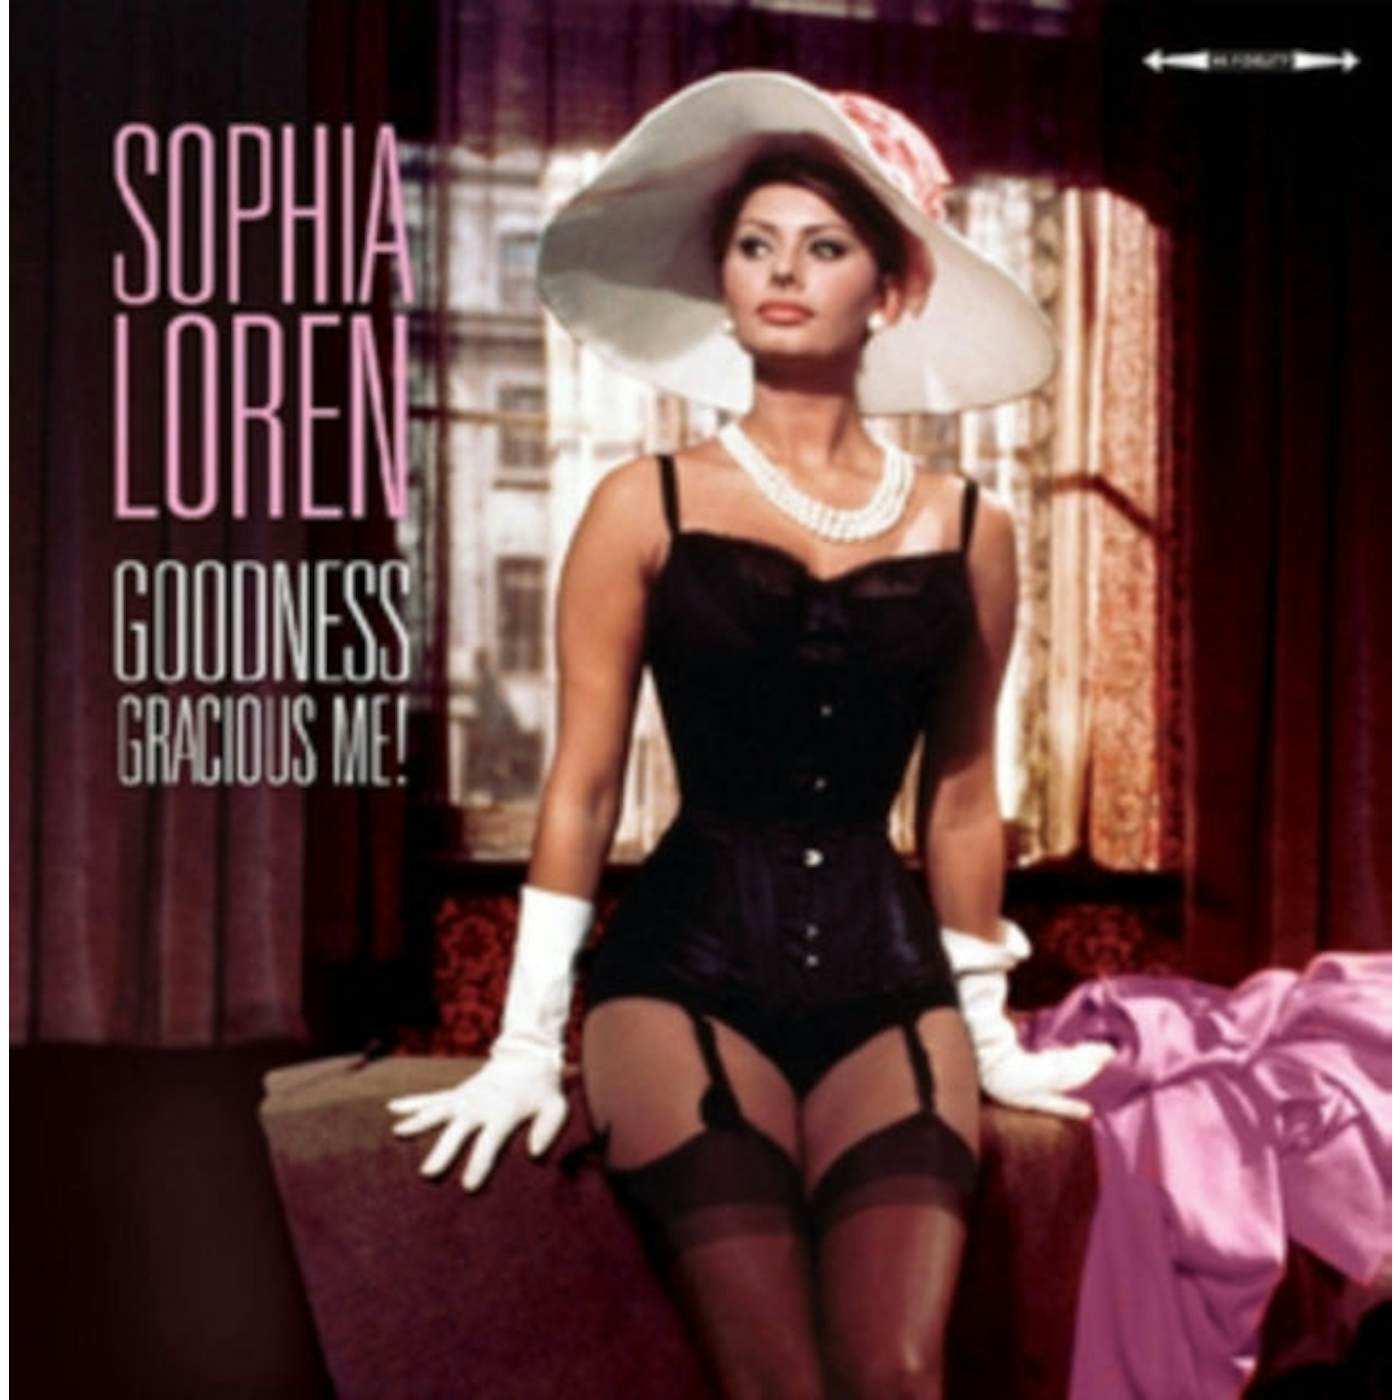 Sophia Loren LP - Goodness Gracious Me! (Red Vinyl)